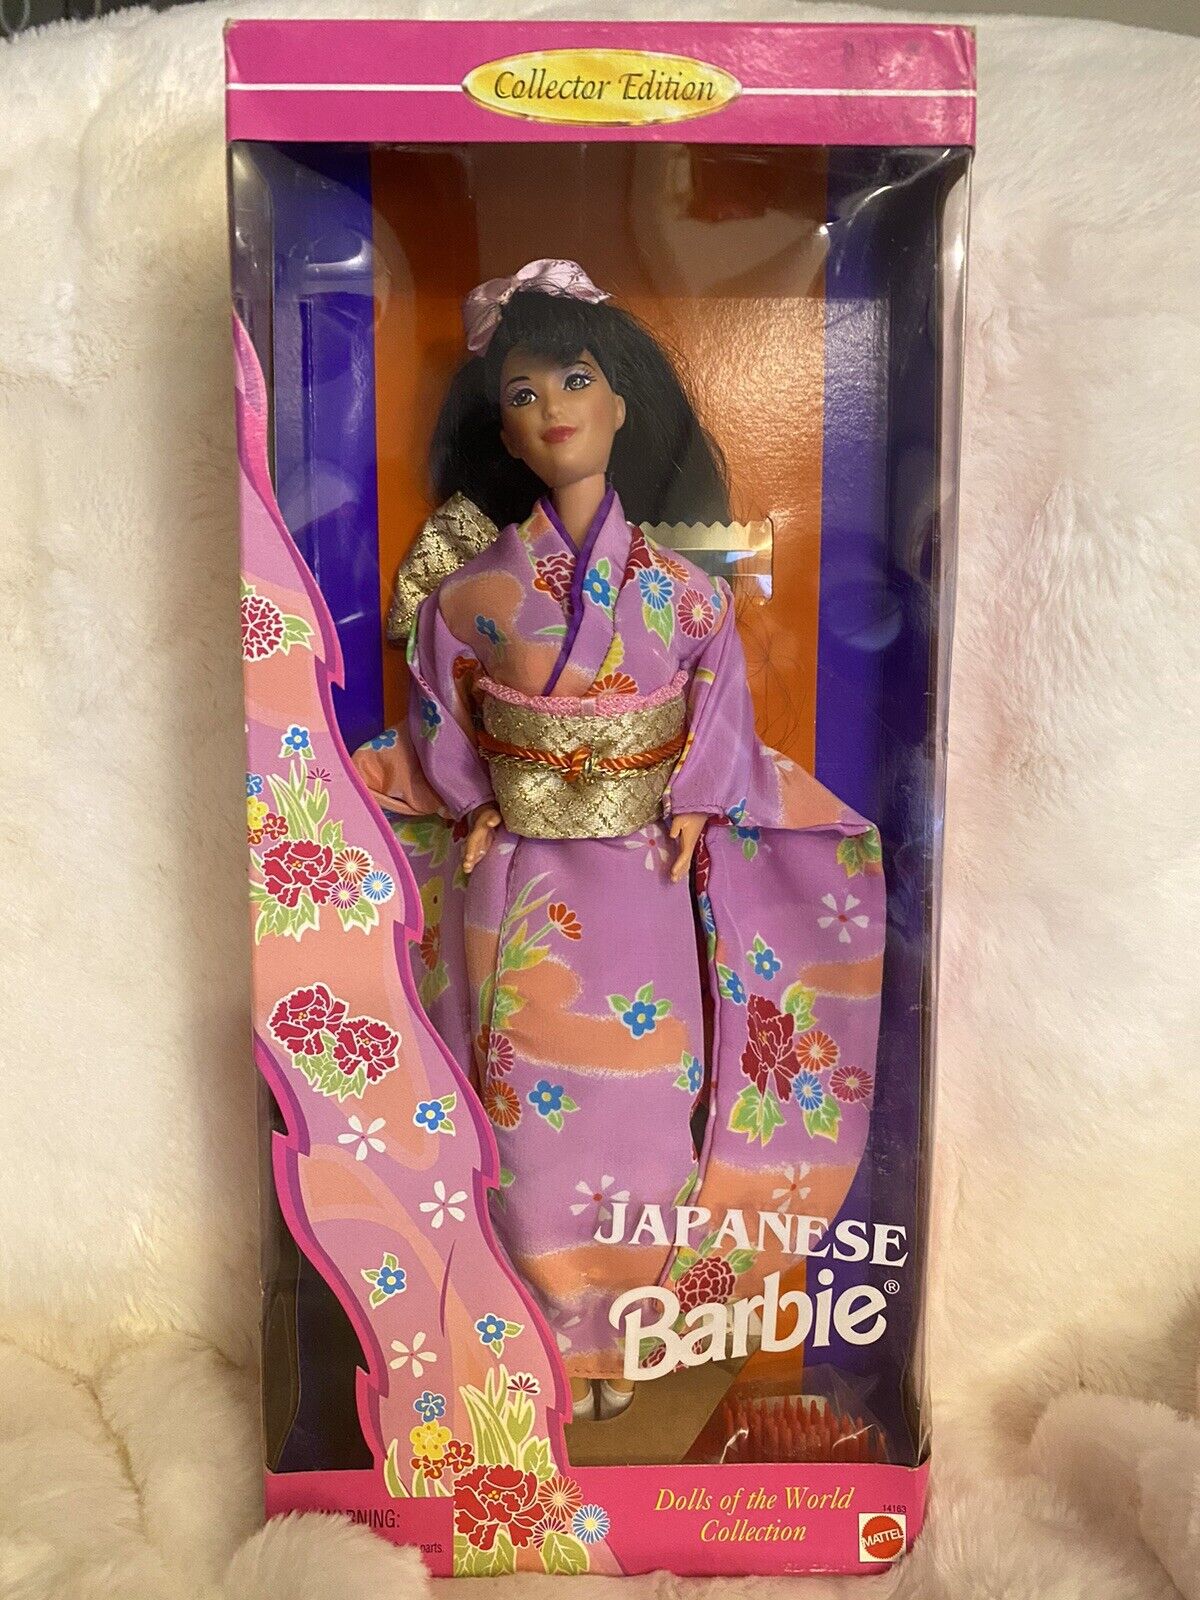 Authentic Brand New Vintage Collector Edition 1995 Japanese Barbie Mattel#14163 Mattel